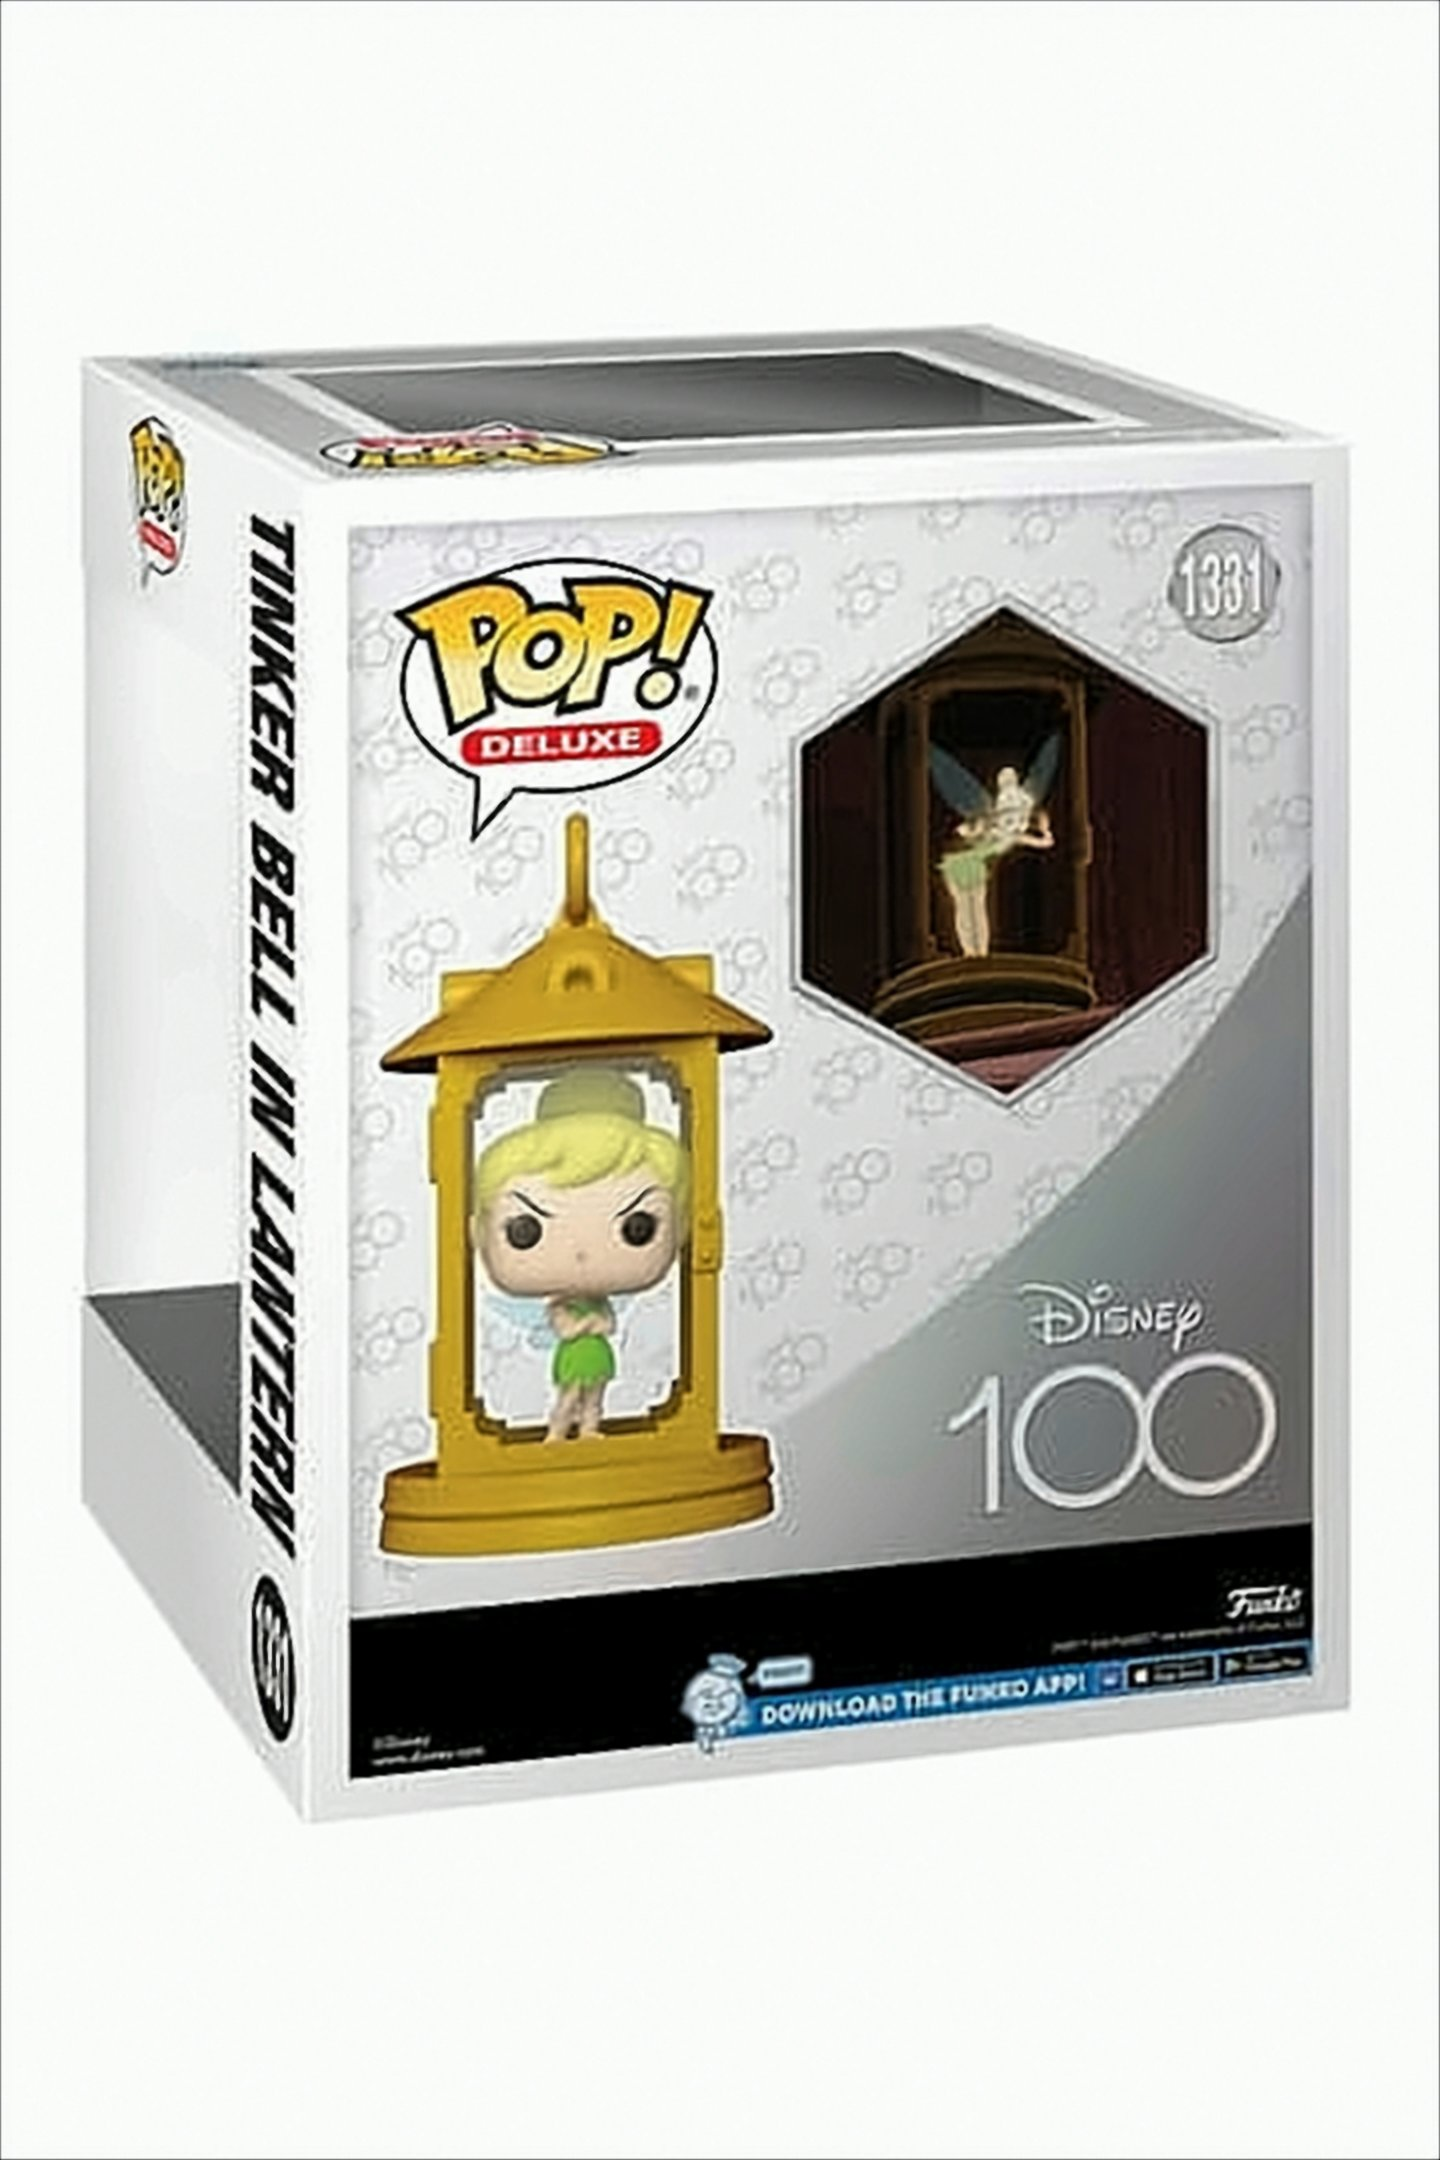 POP Deluxe - Disney 100 Lantern in Bell Tinker 